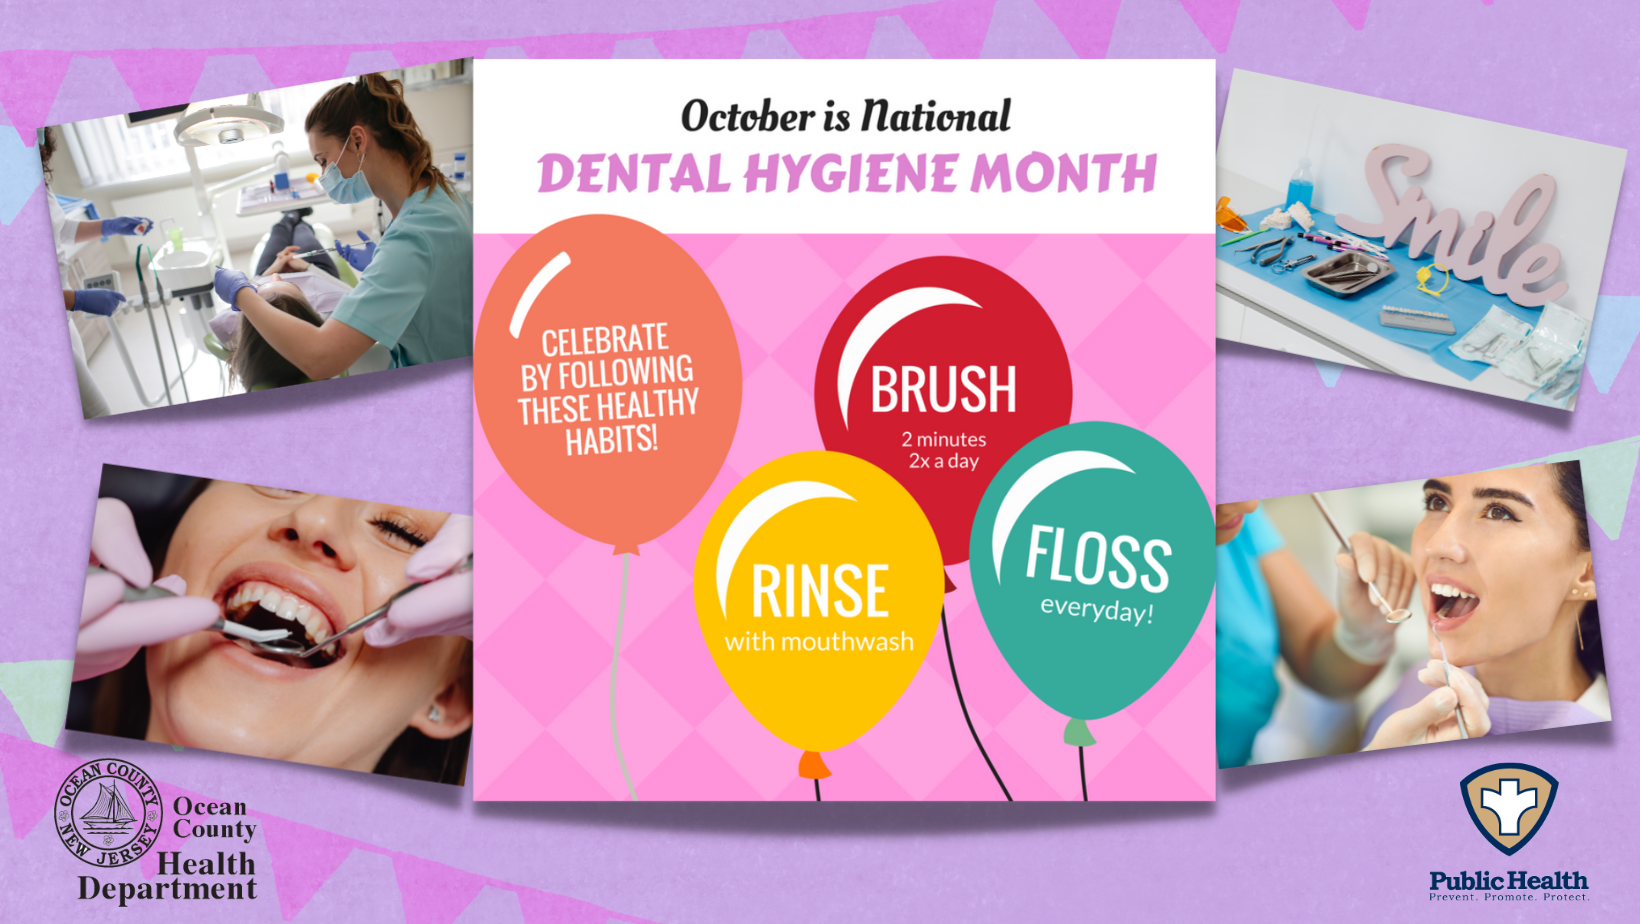 October is National Dental Hygiene Month! Ocean County Health Department